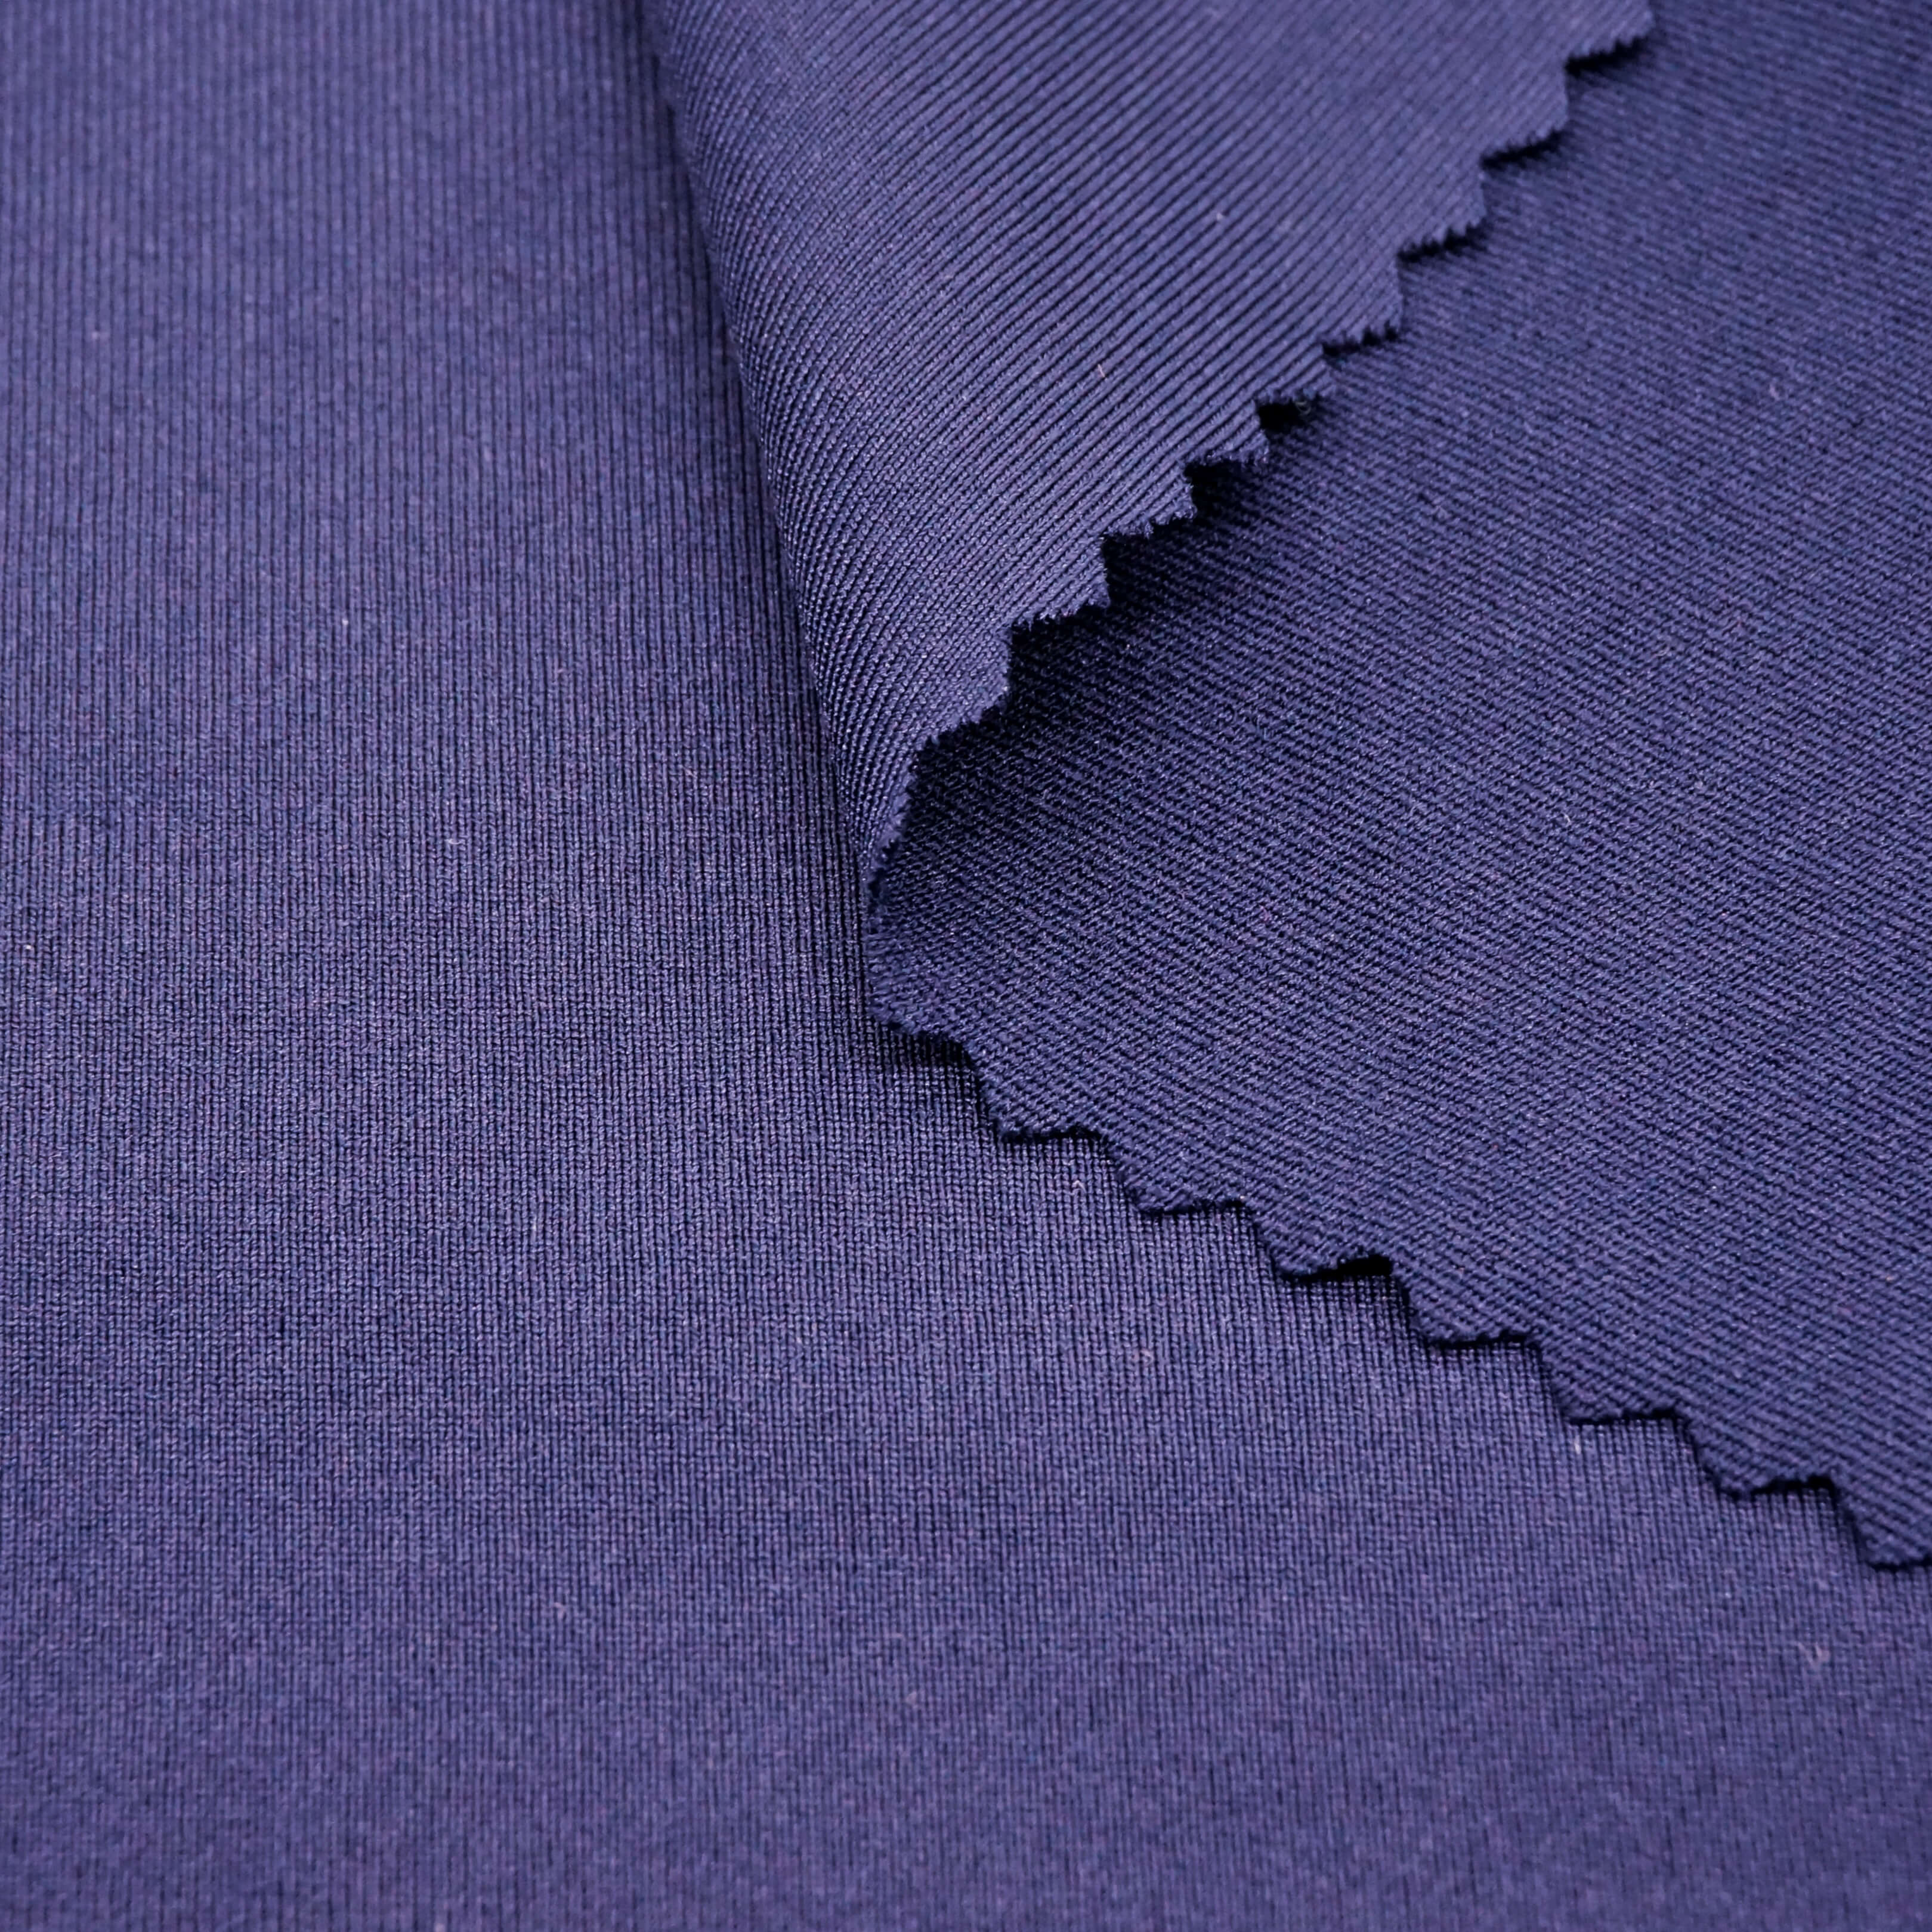 90%Nylon 10%Lycra Super Soft Underwear Fabric